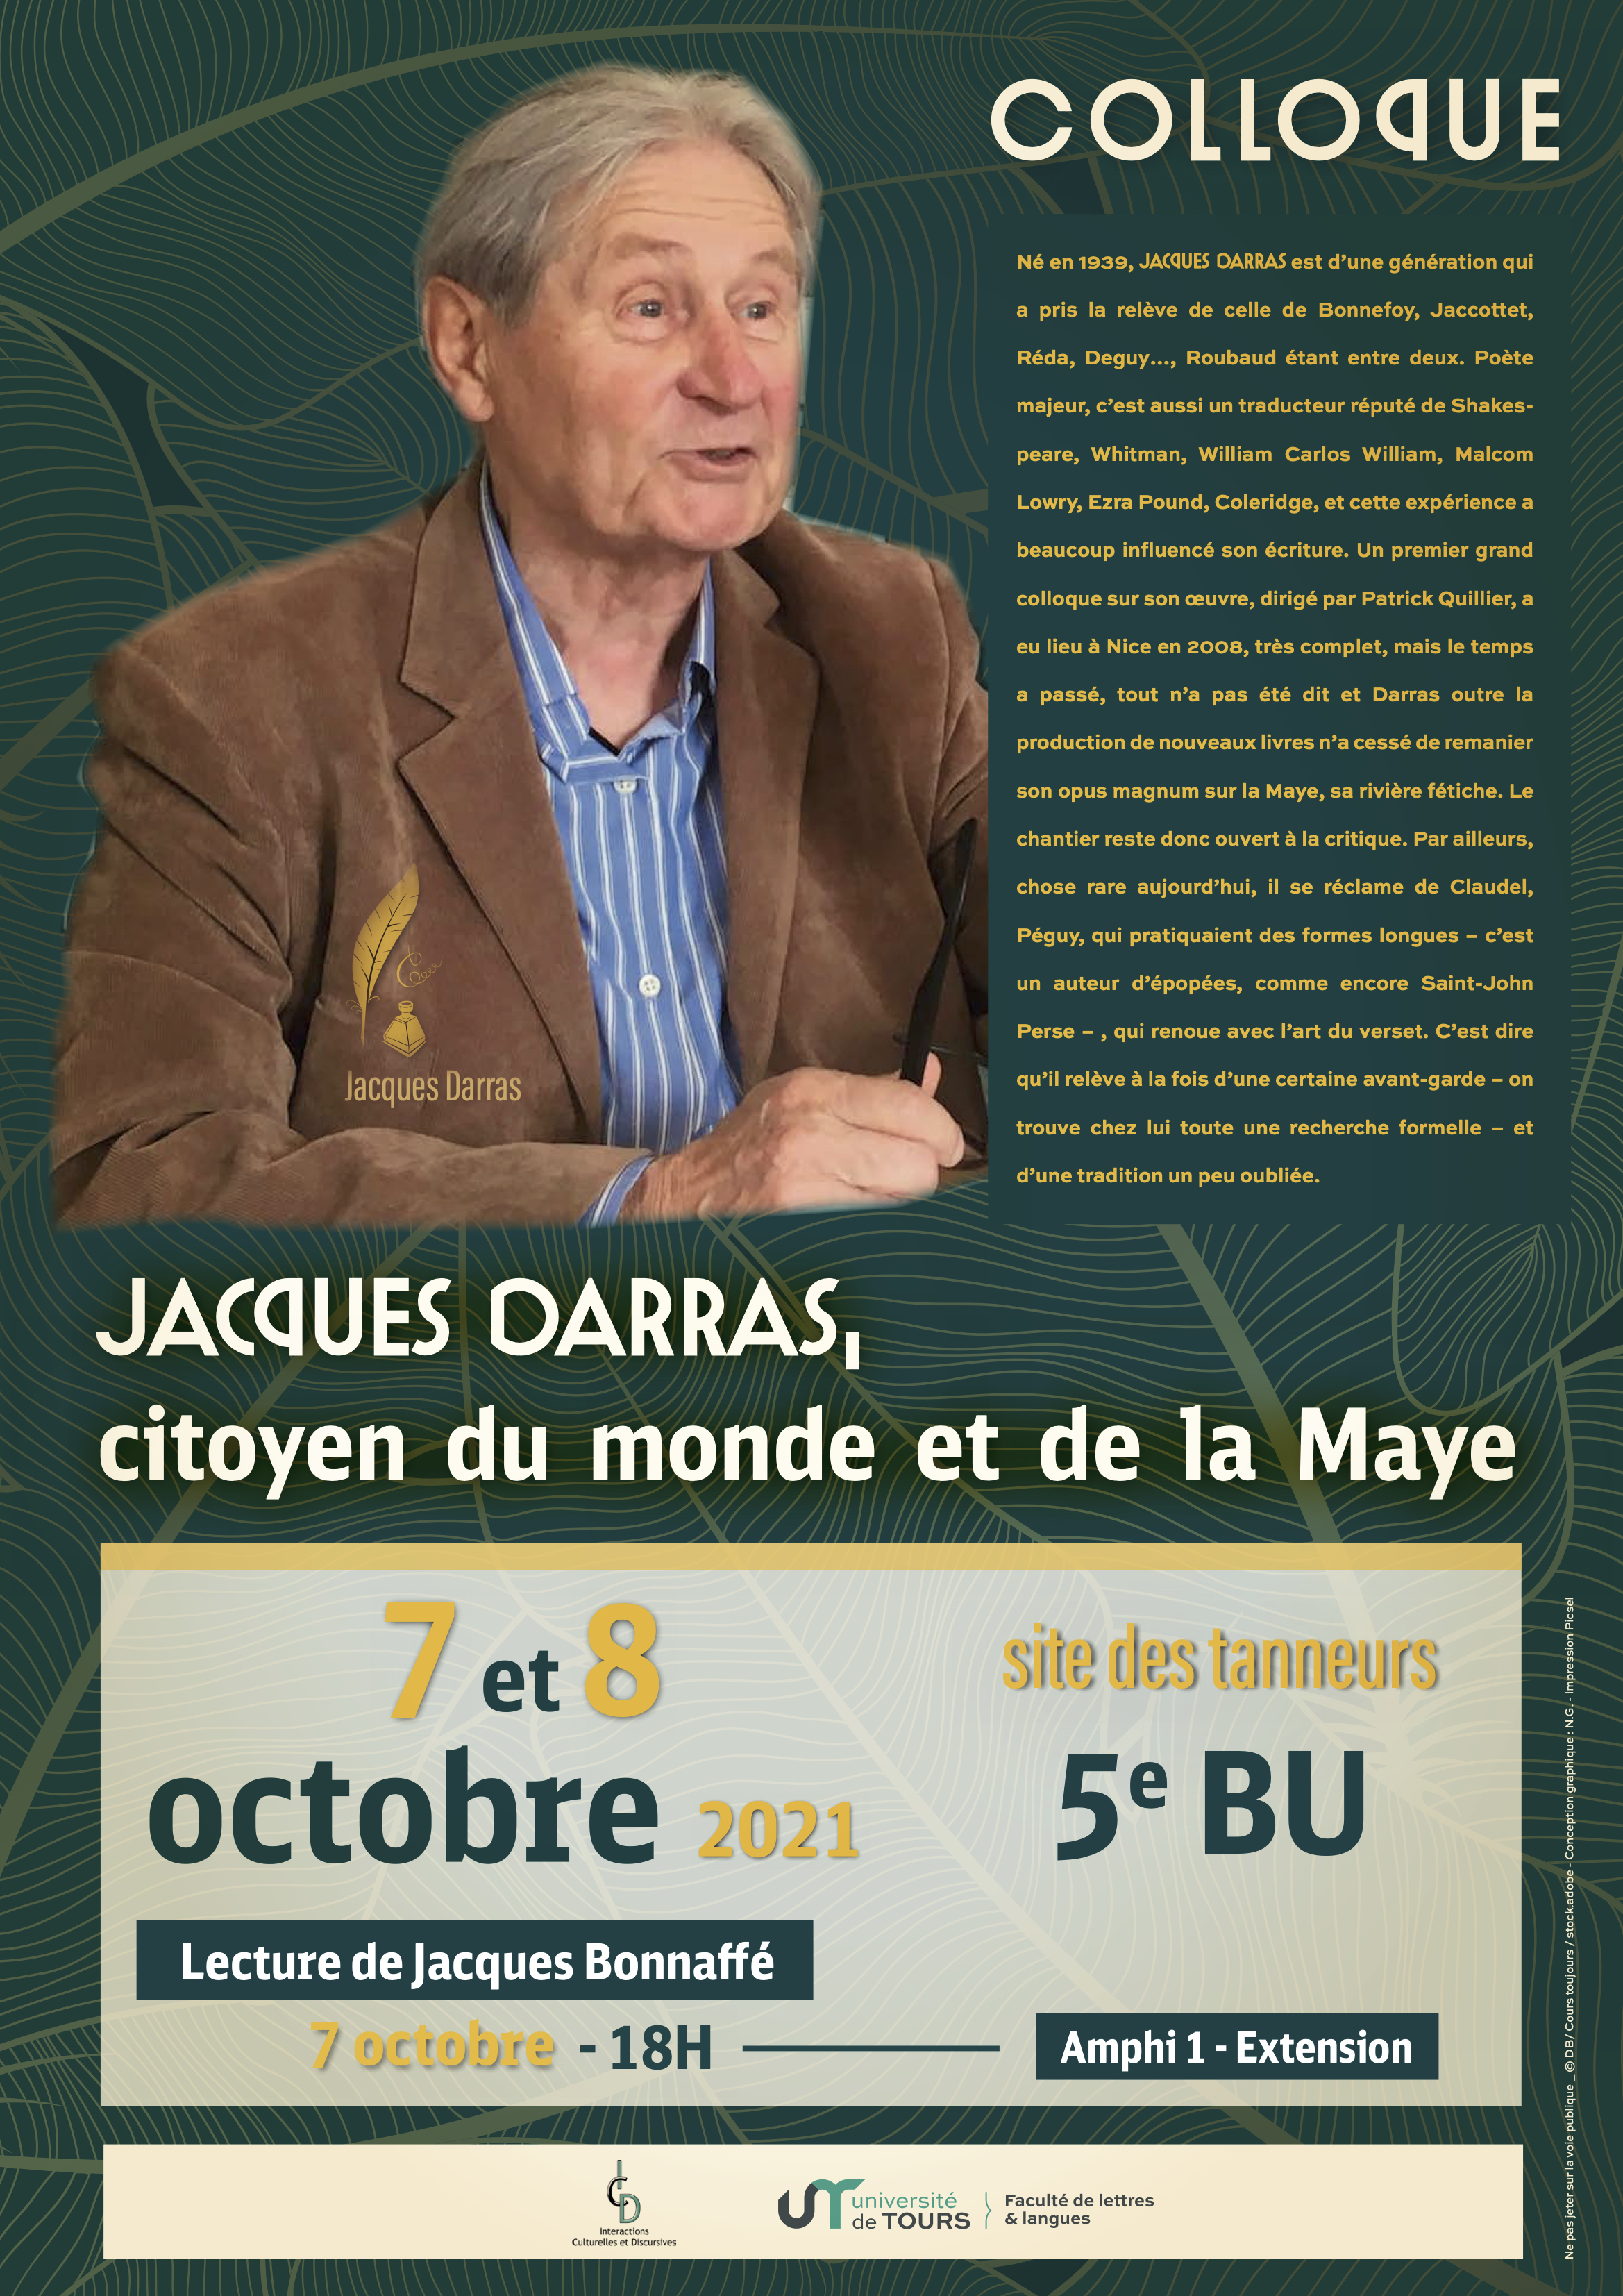 Jacques Darras